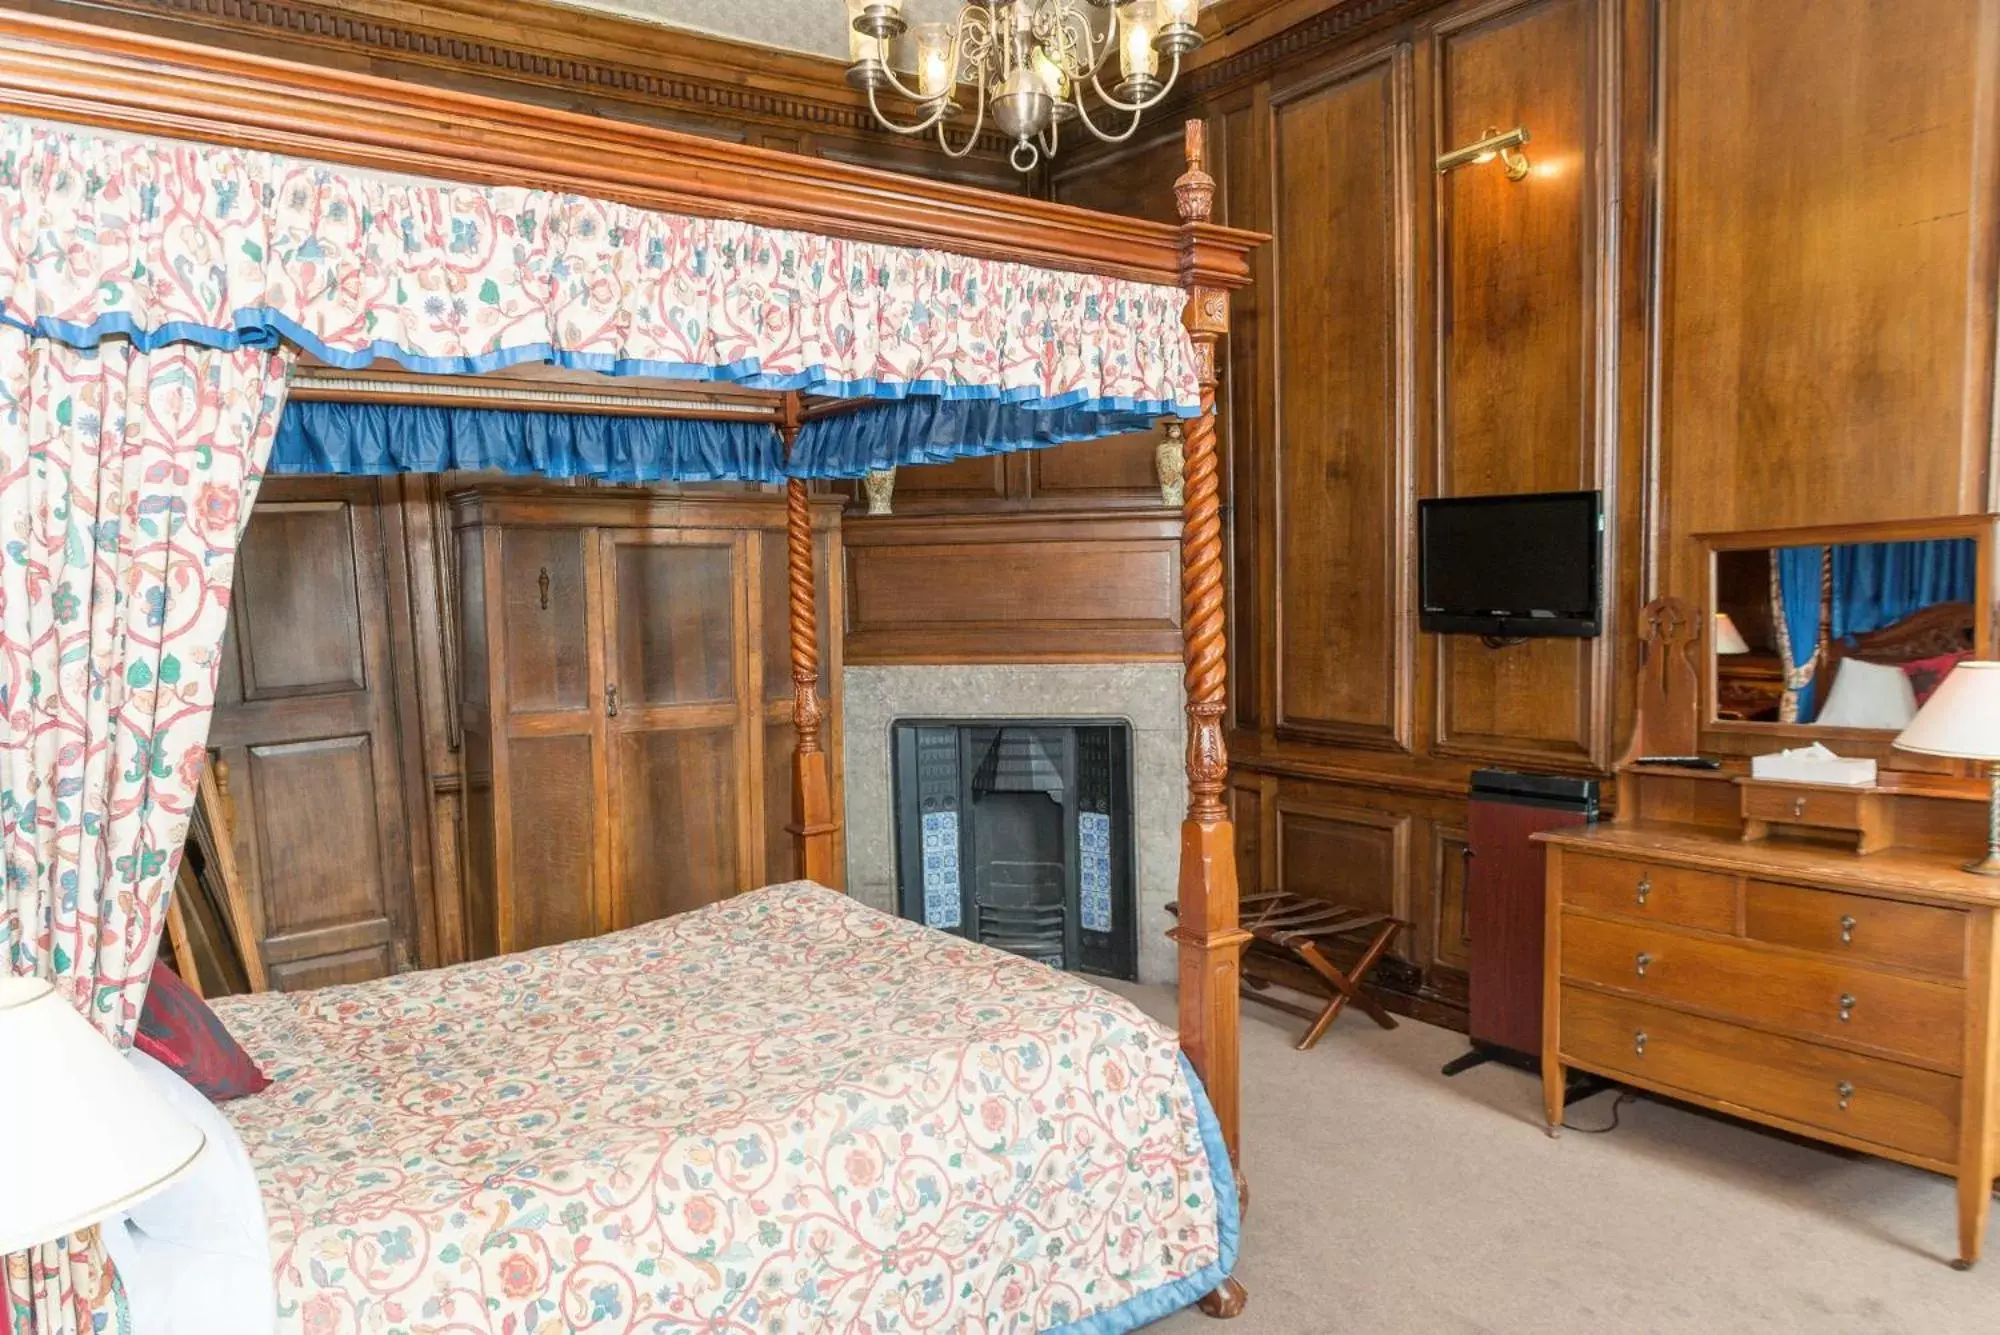 Bedroom, Bed in Haughton Hall